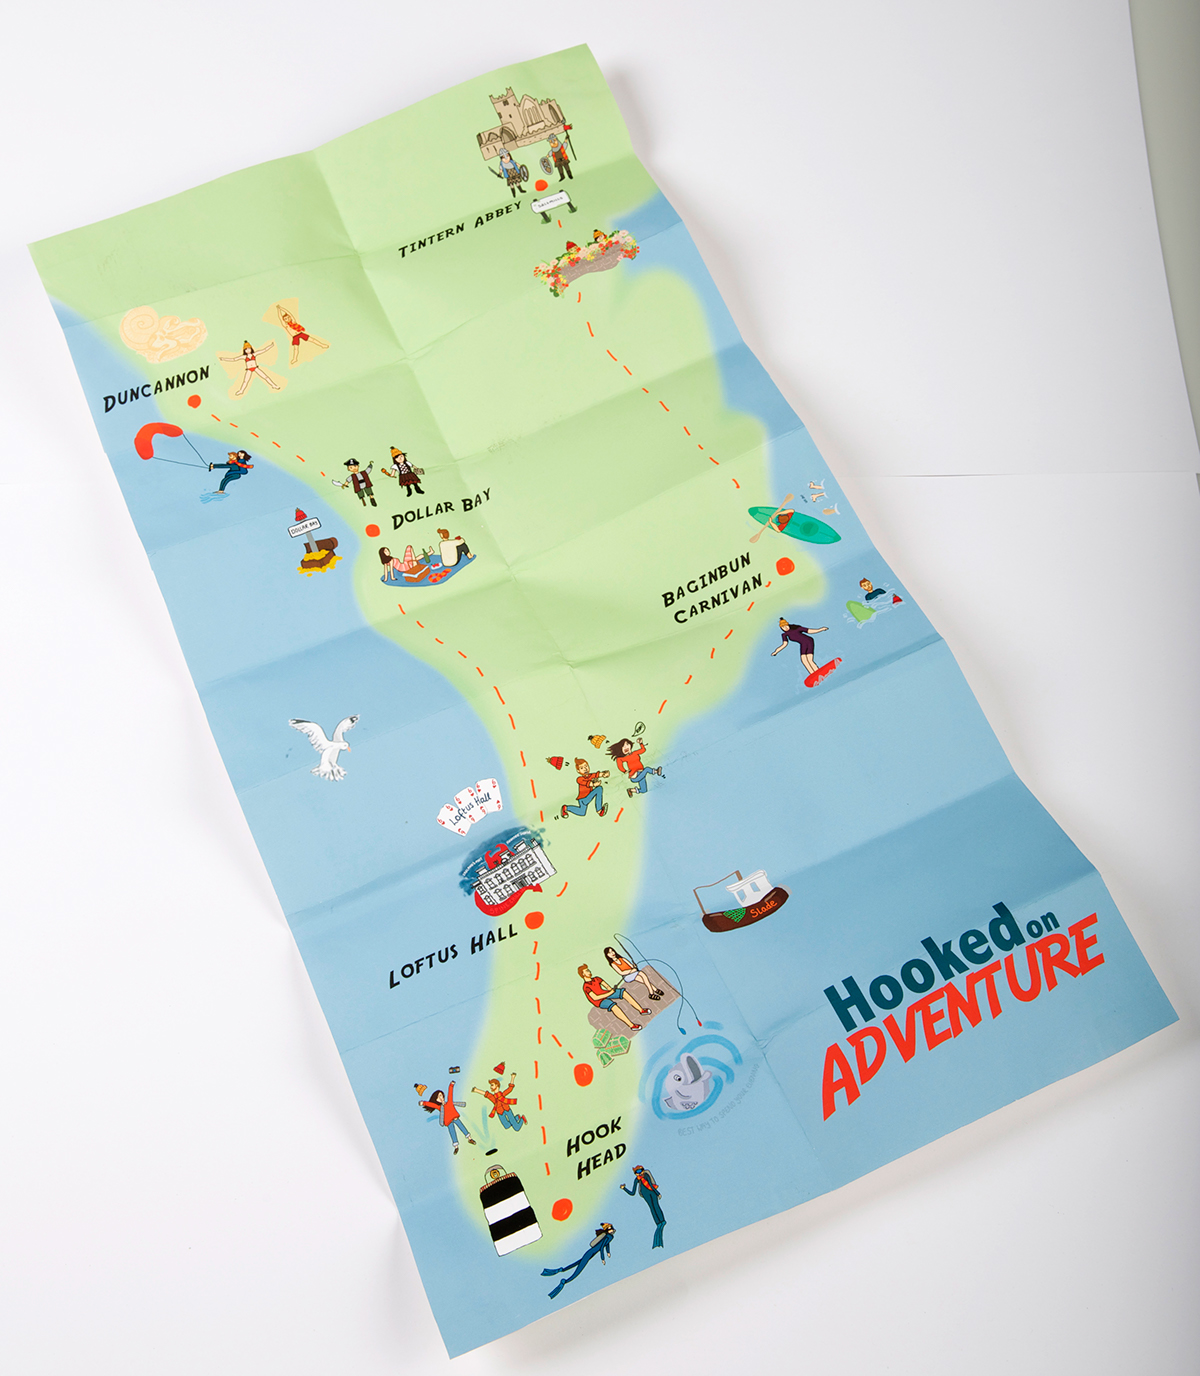 #illustration #map #accordion fold #touristguide #souvenir map #adventure  #hookedonadventure #activities #pocket guide #print #fold out #characters 